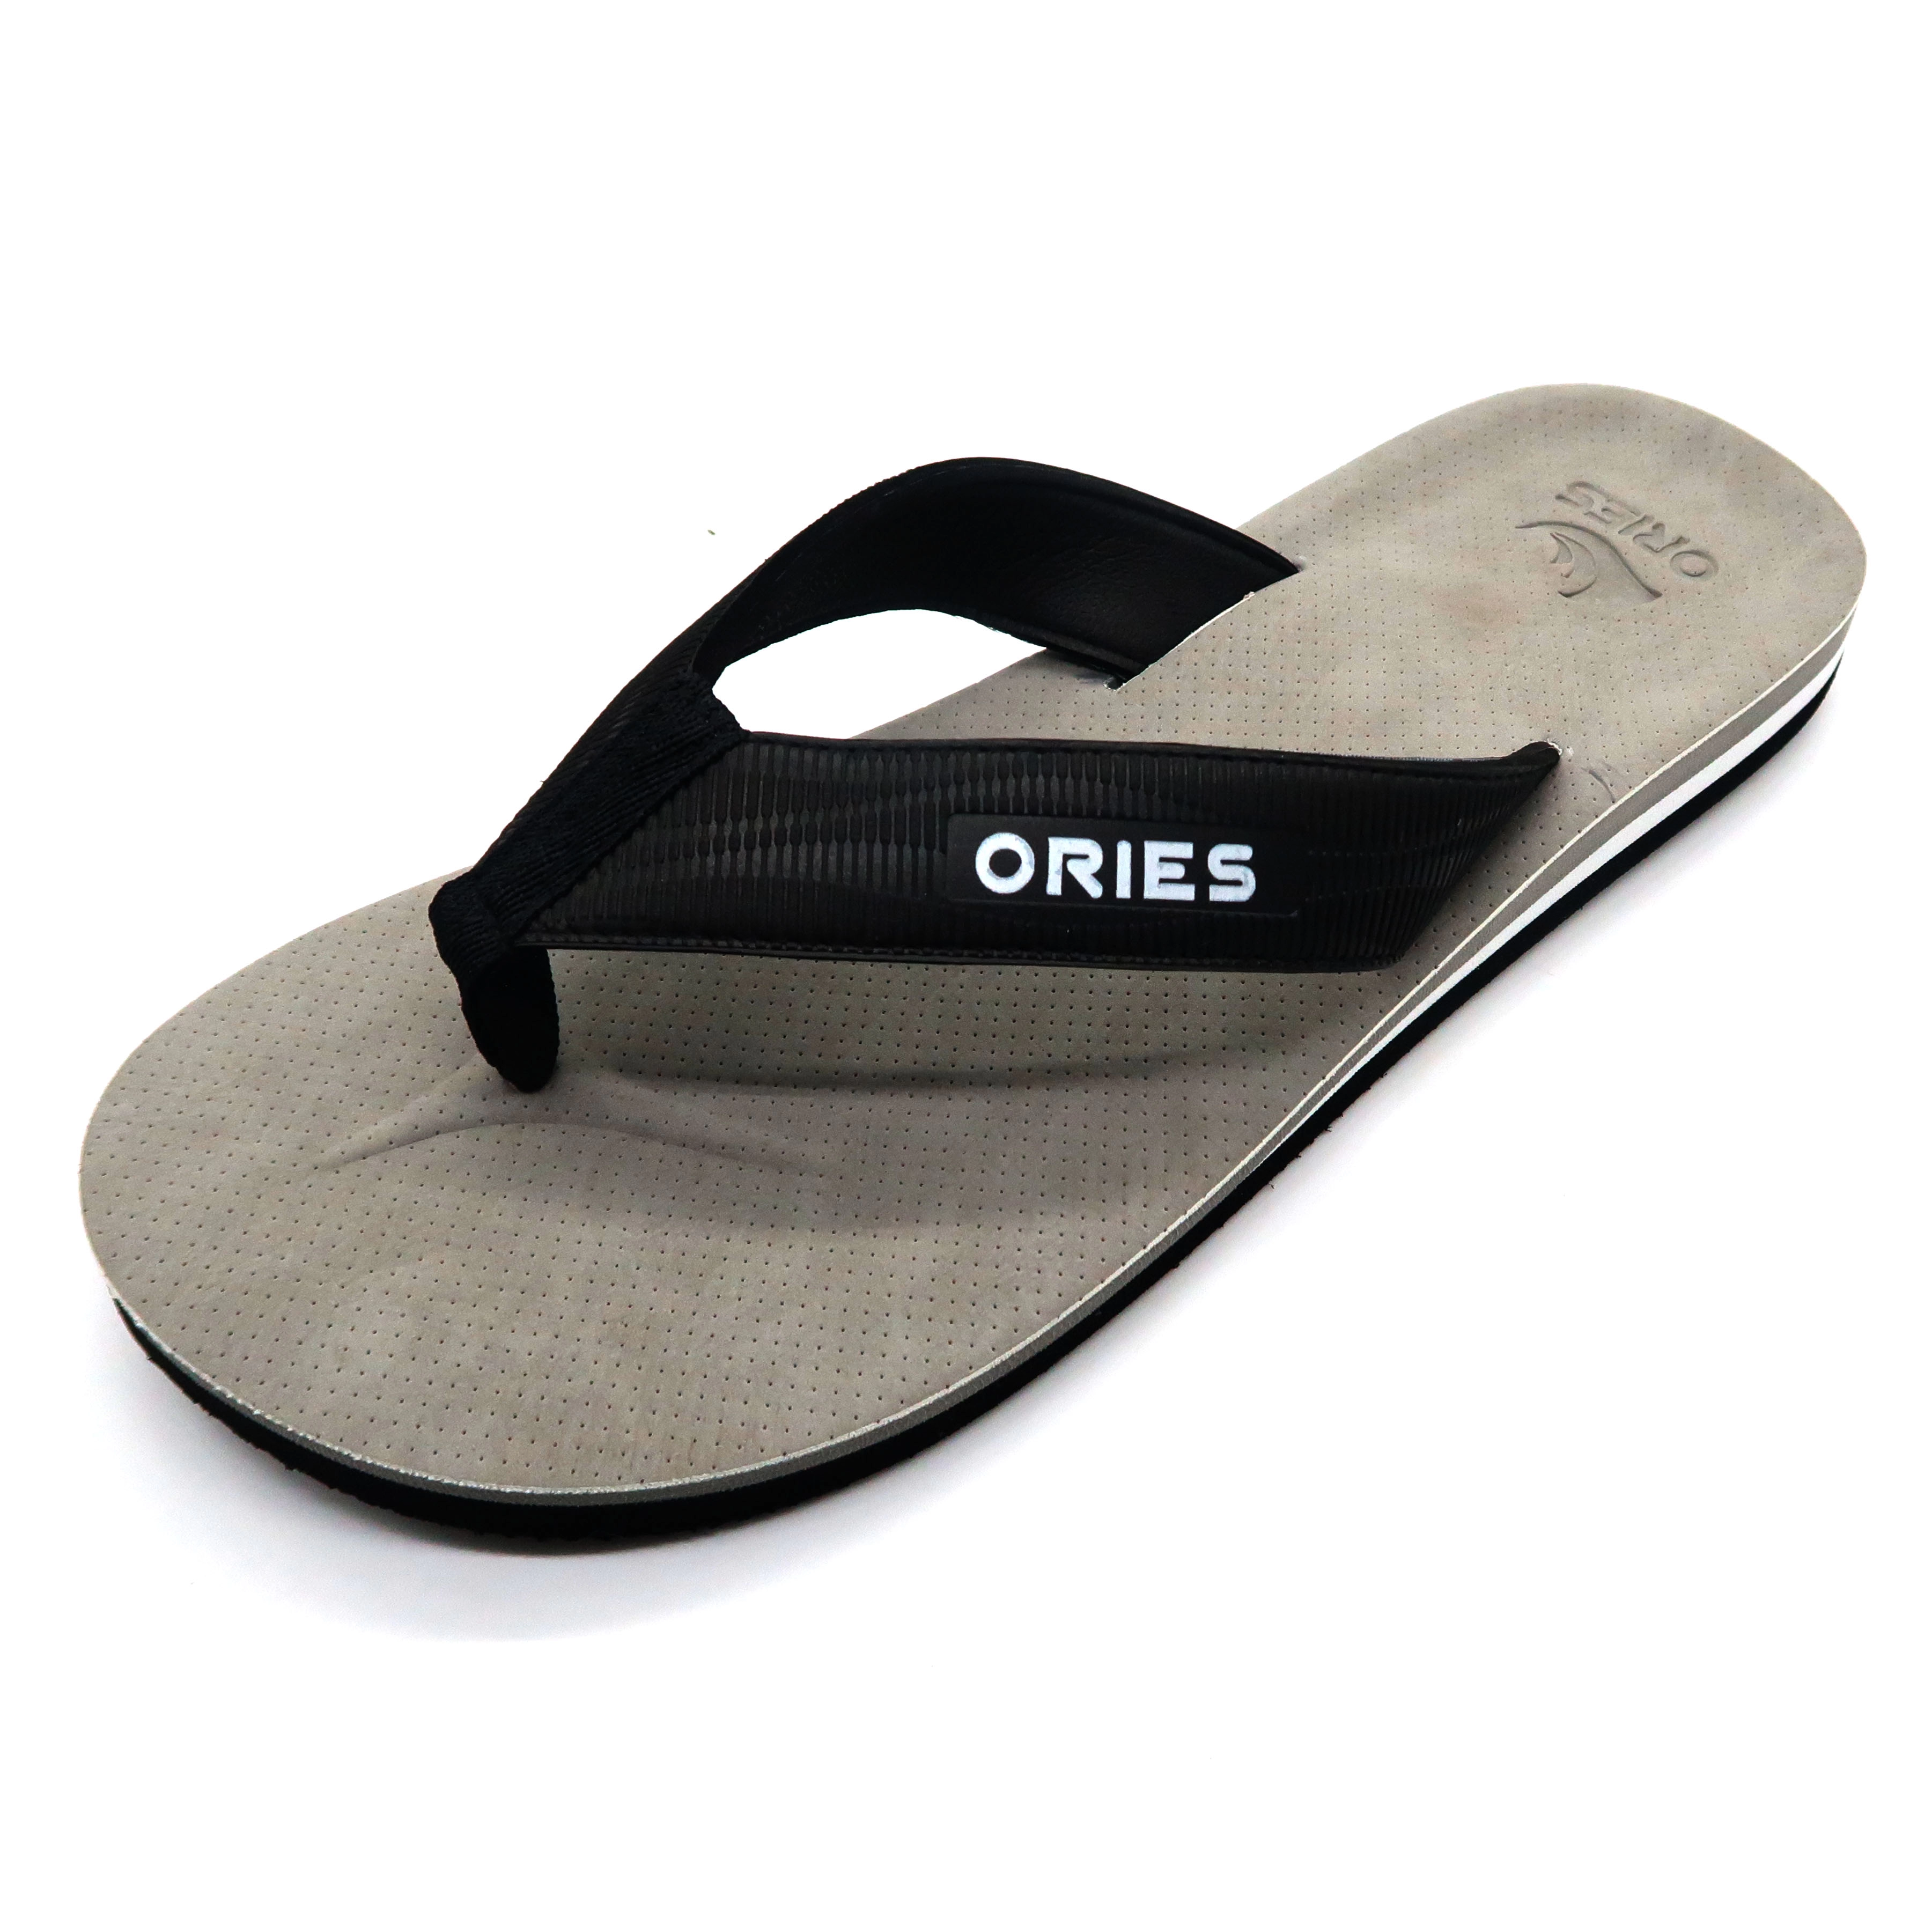 ODM green material comfortable leather men flip flops slippers outdoor sandals